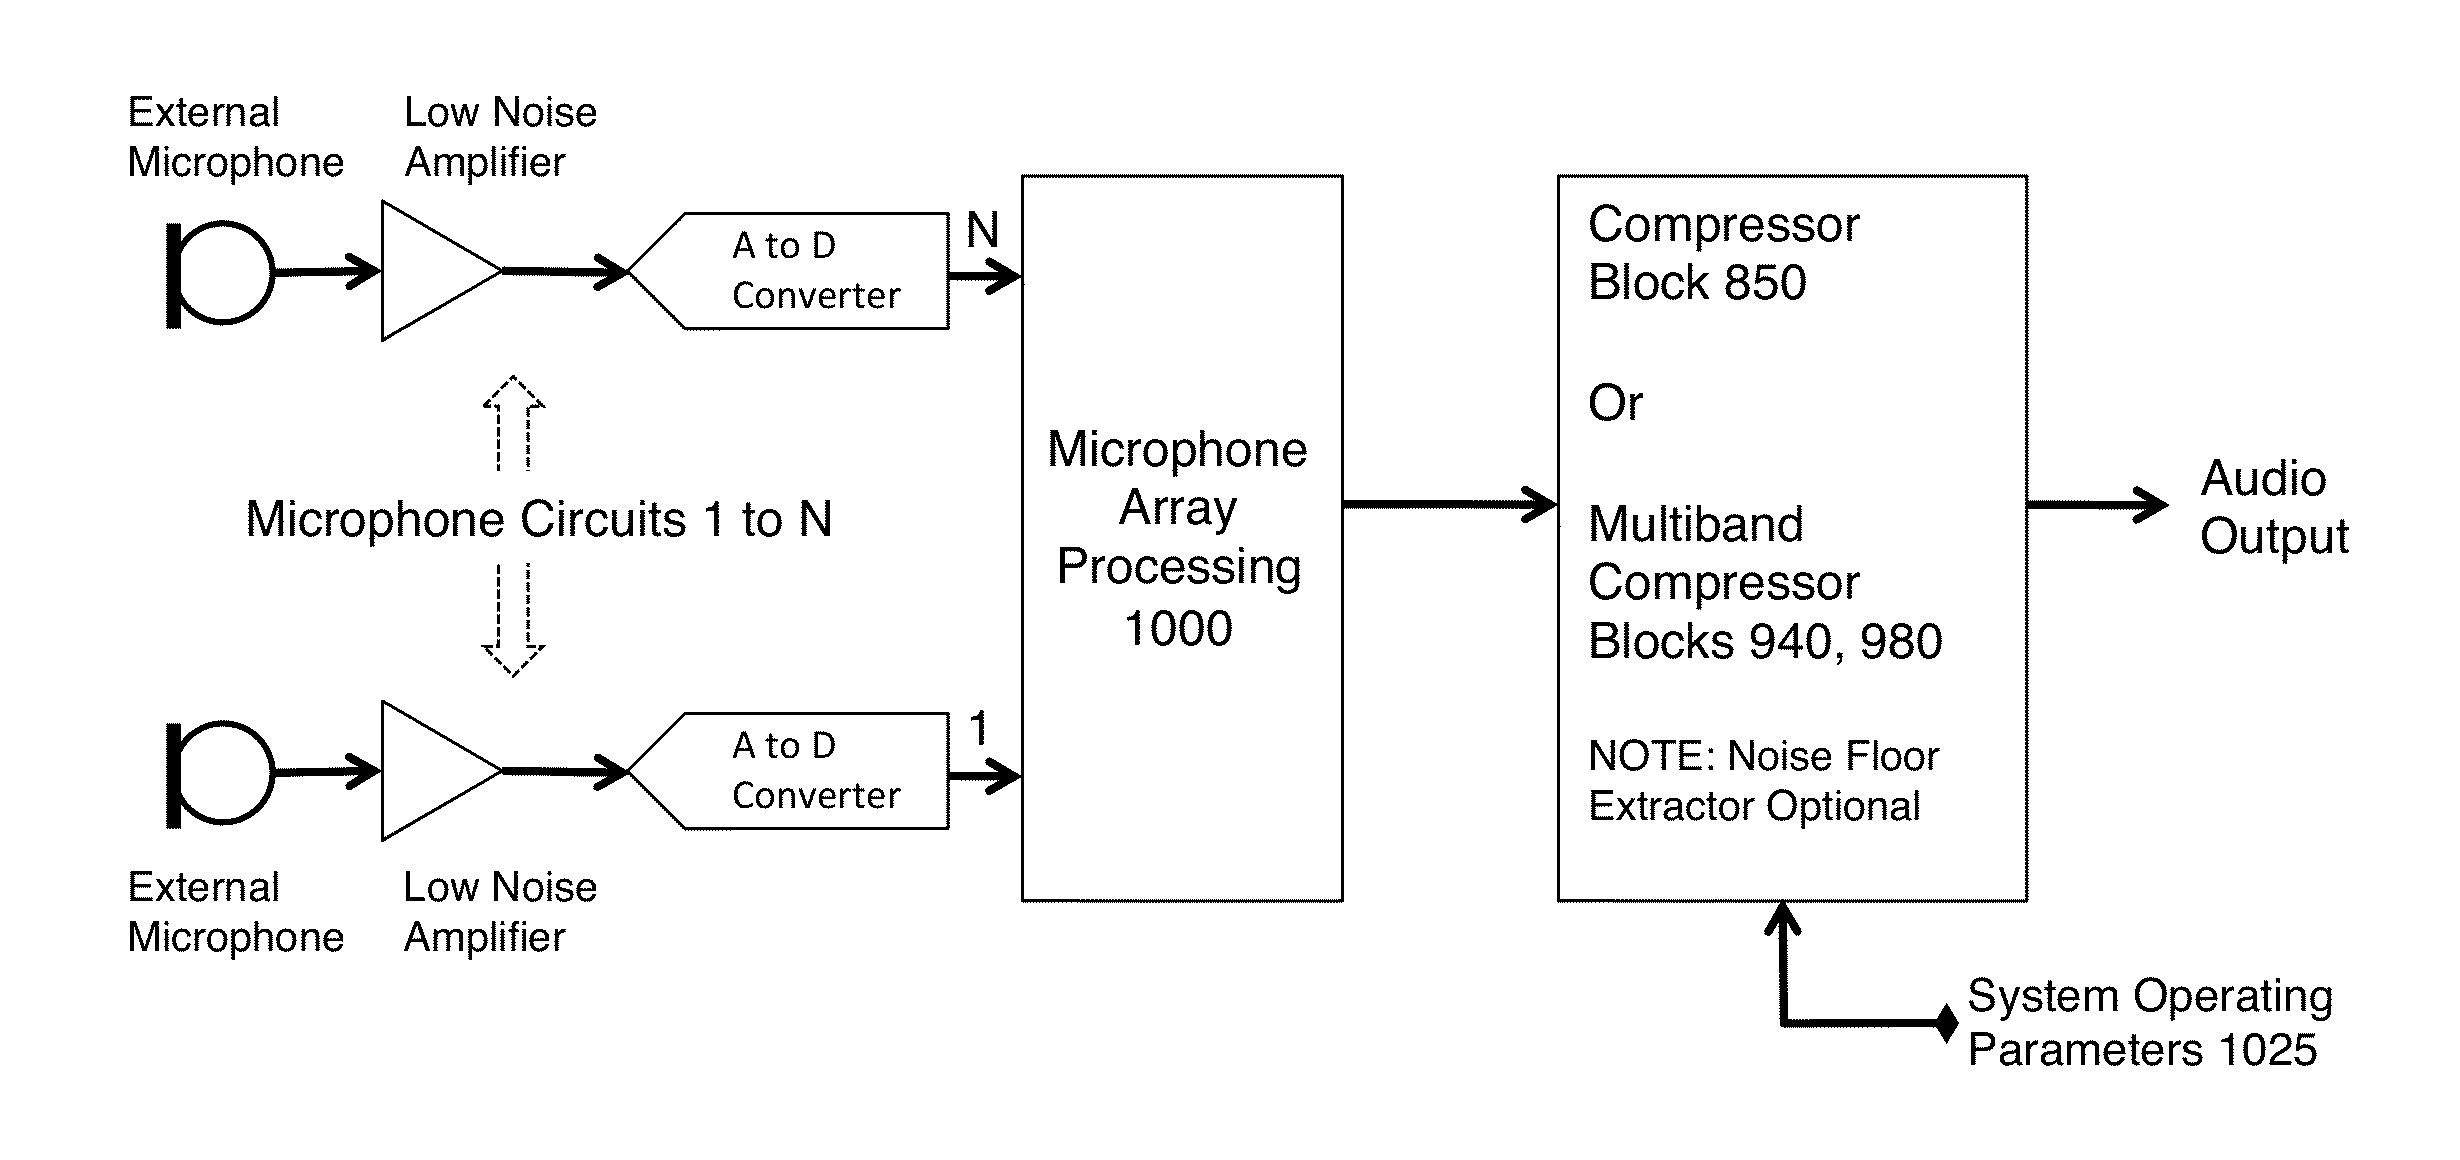 Compressor augmented array processing